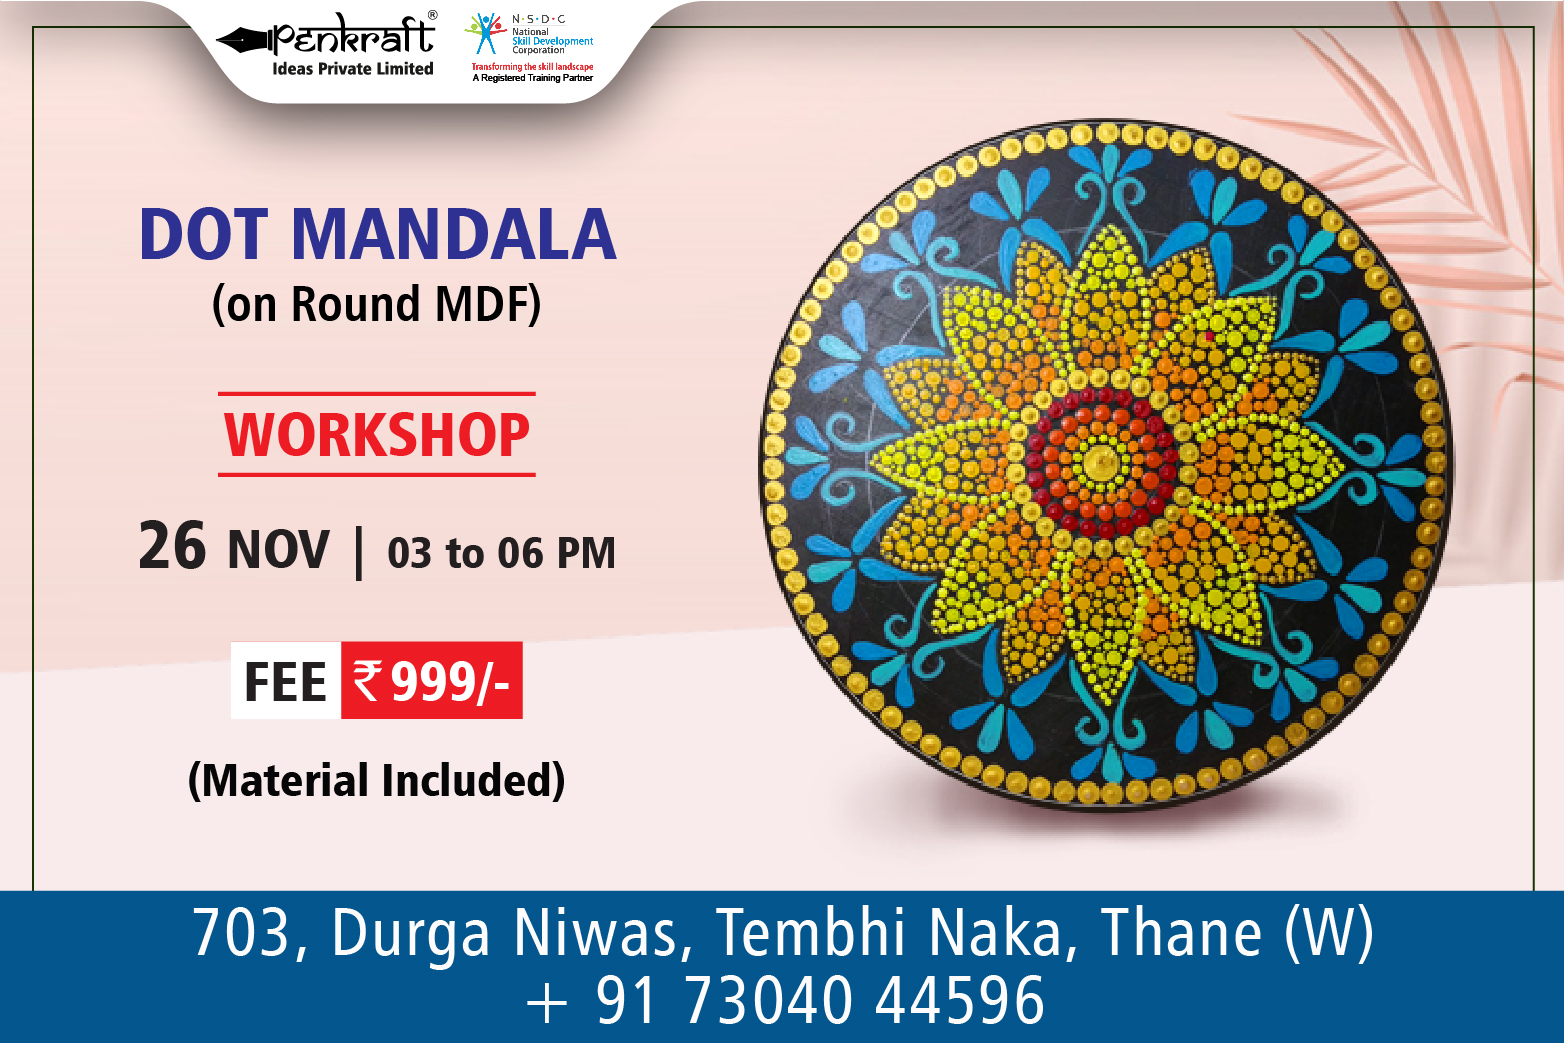 Penkraft Dot Mandala on Round MDF Workshop!